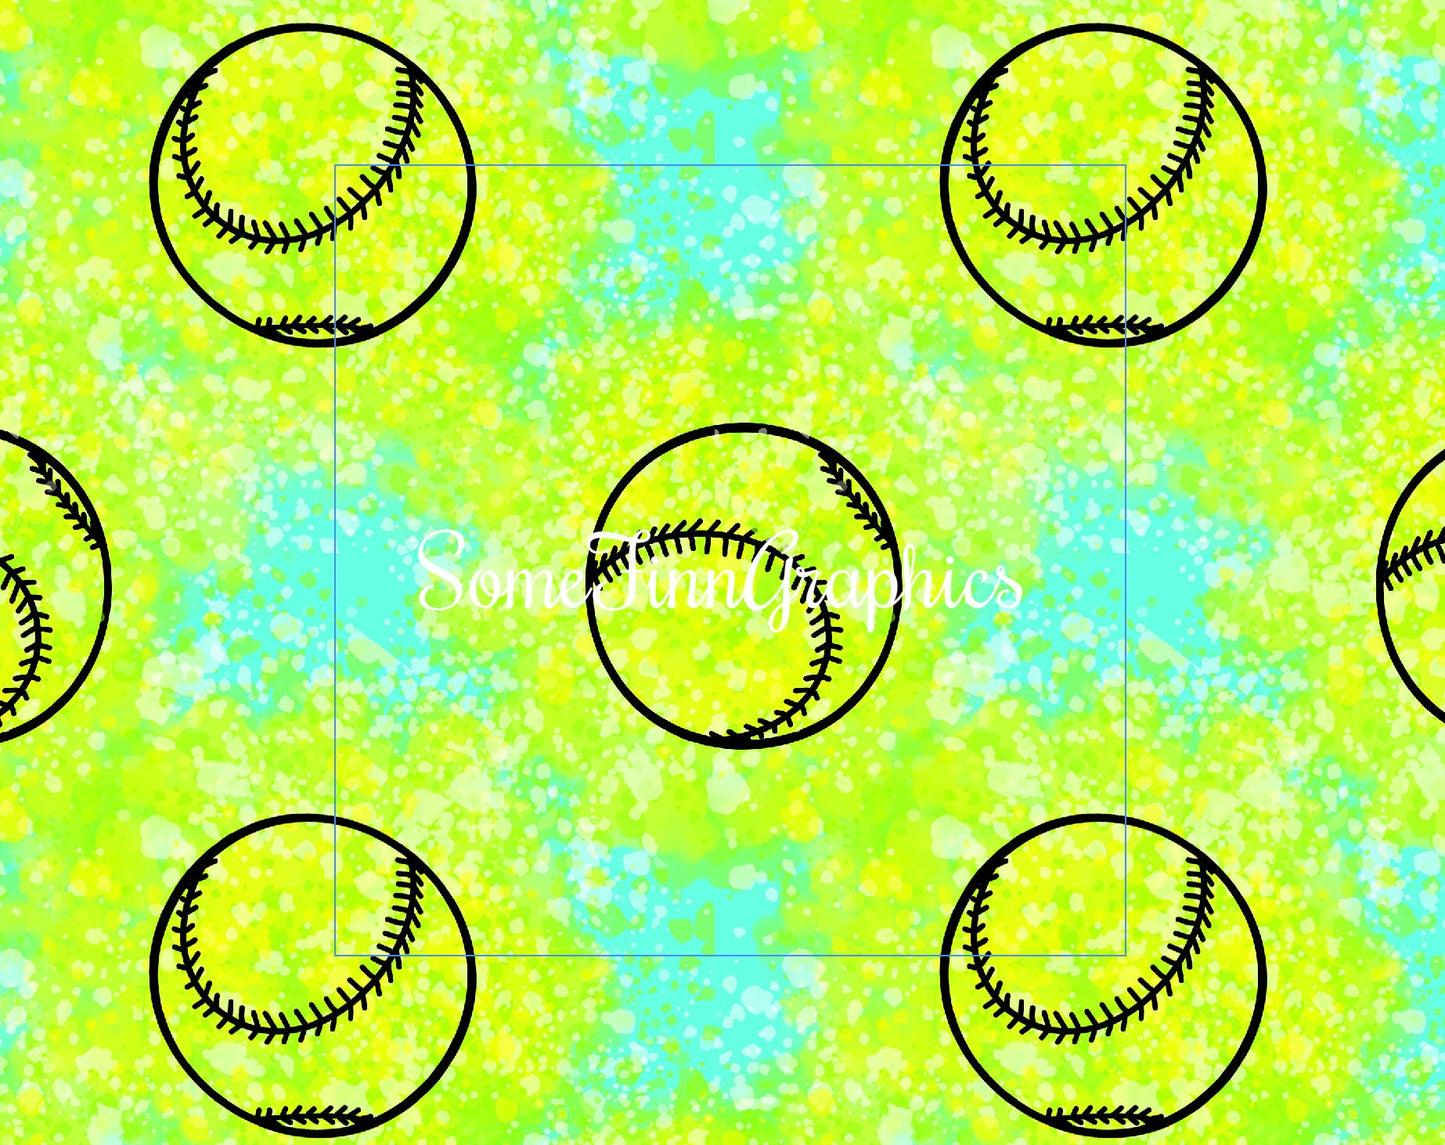 Pitch Please, Softball Neon Seamless Design